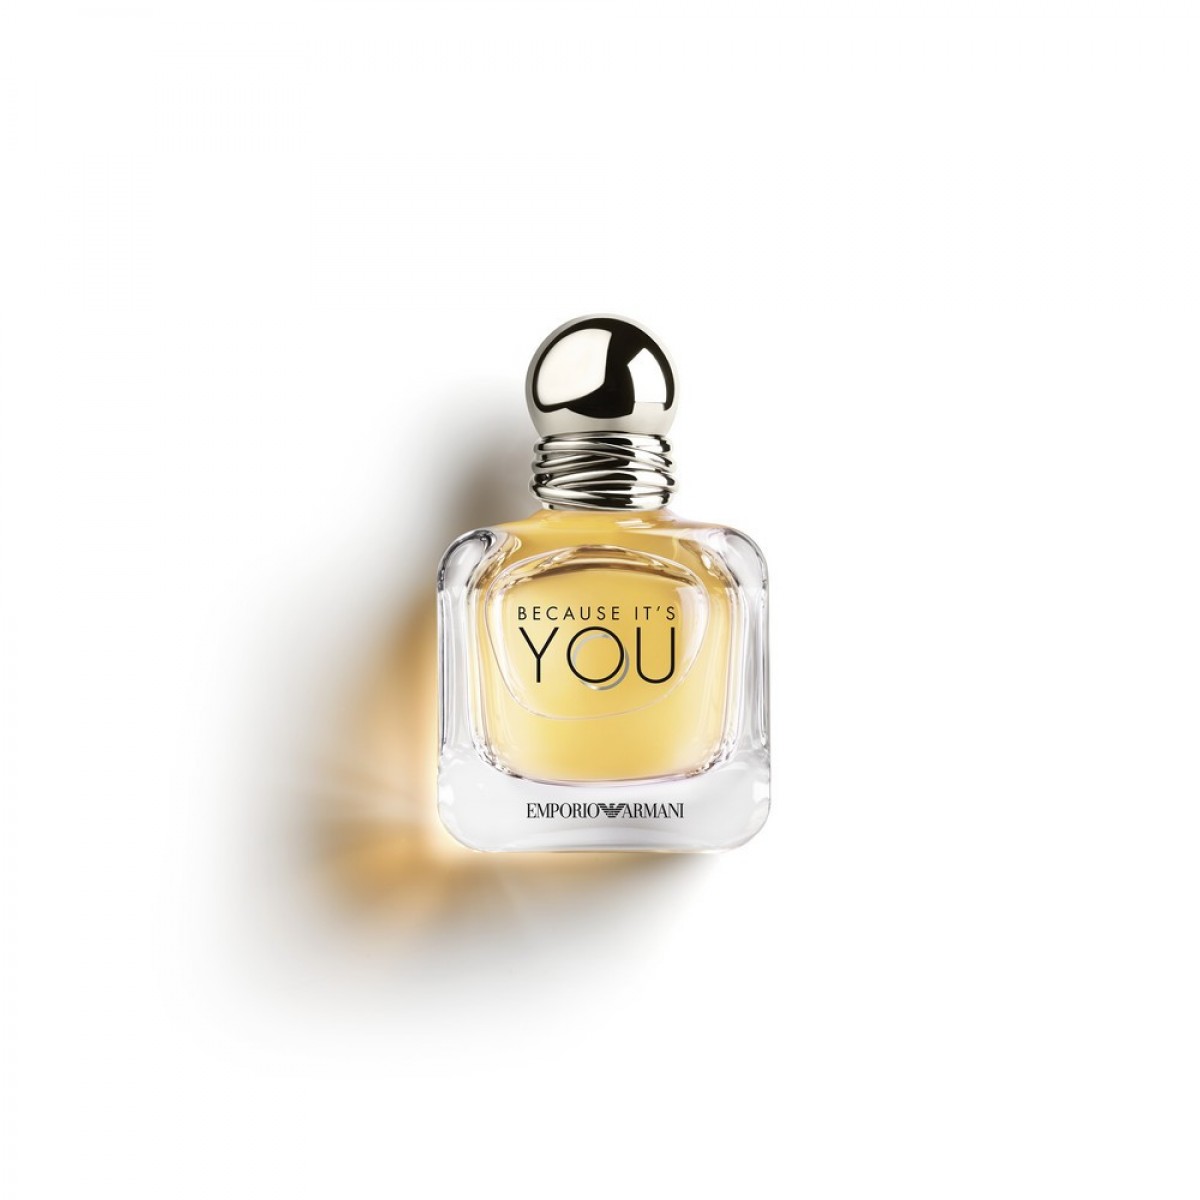 Emporio Armani Because It's You Eau de Parfum | Burmunk Perfumery Chain